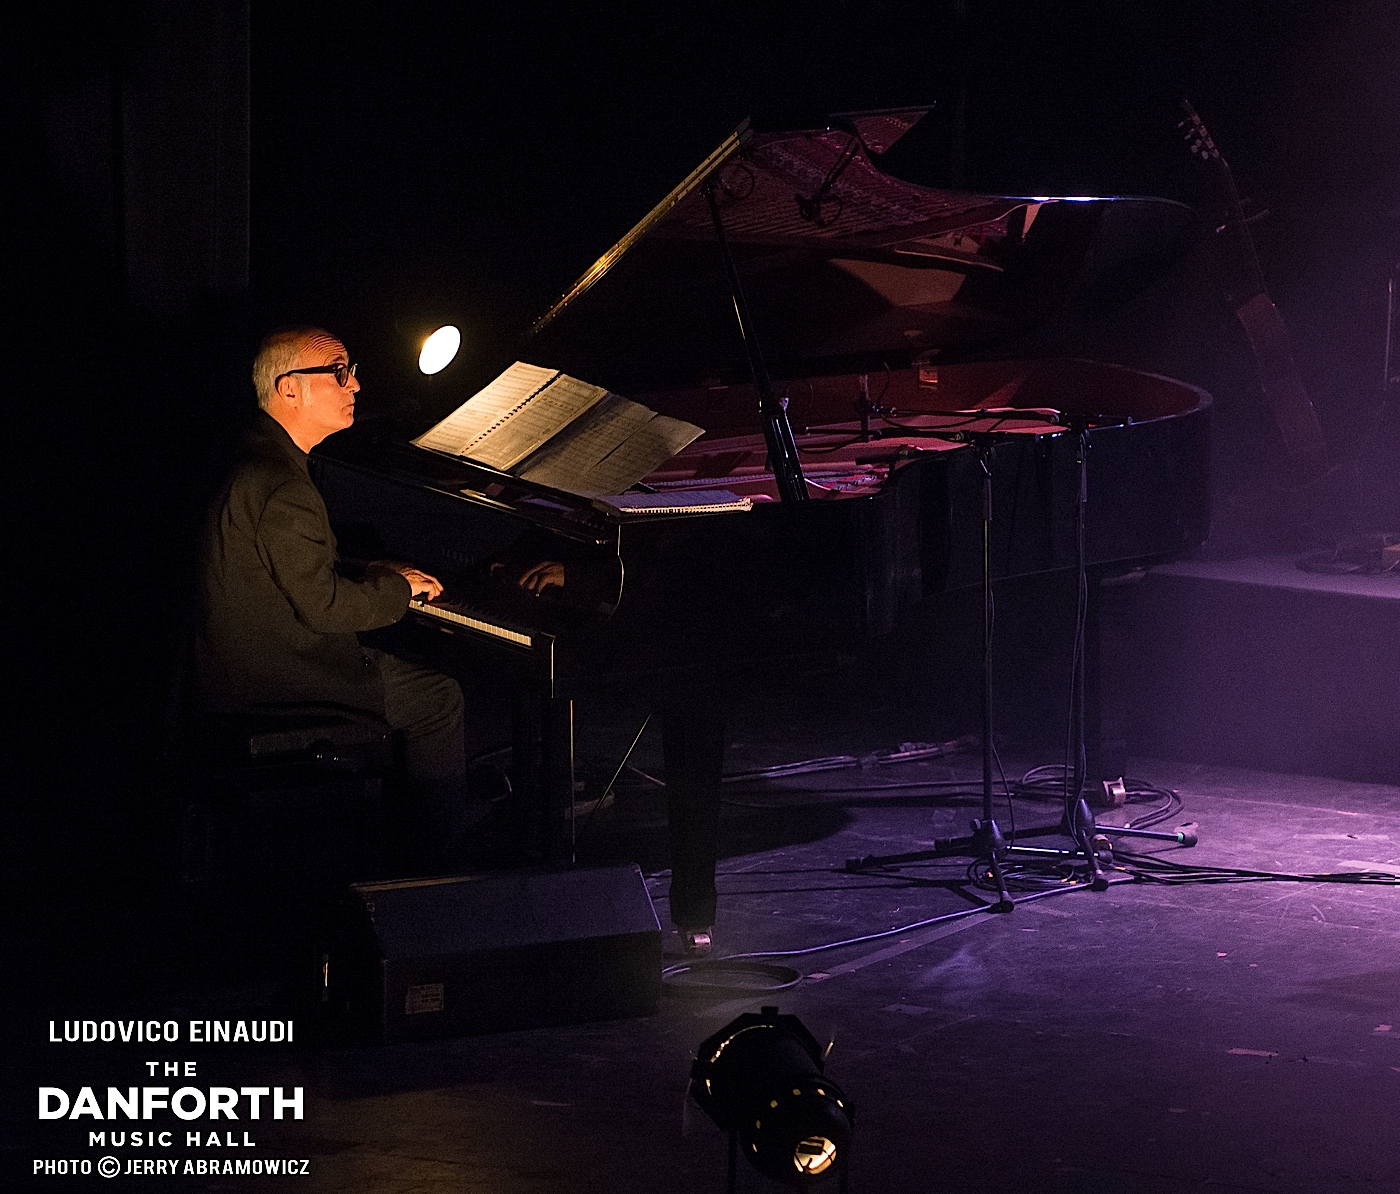 20130517 Ludovico Einaudi performs at The Danforth Music Hall Toronto 0177